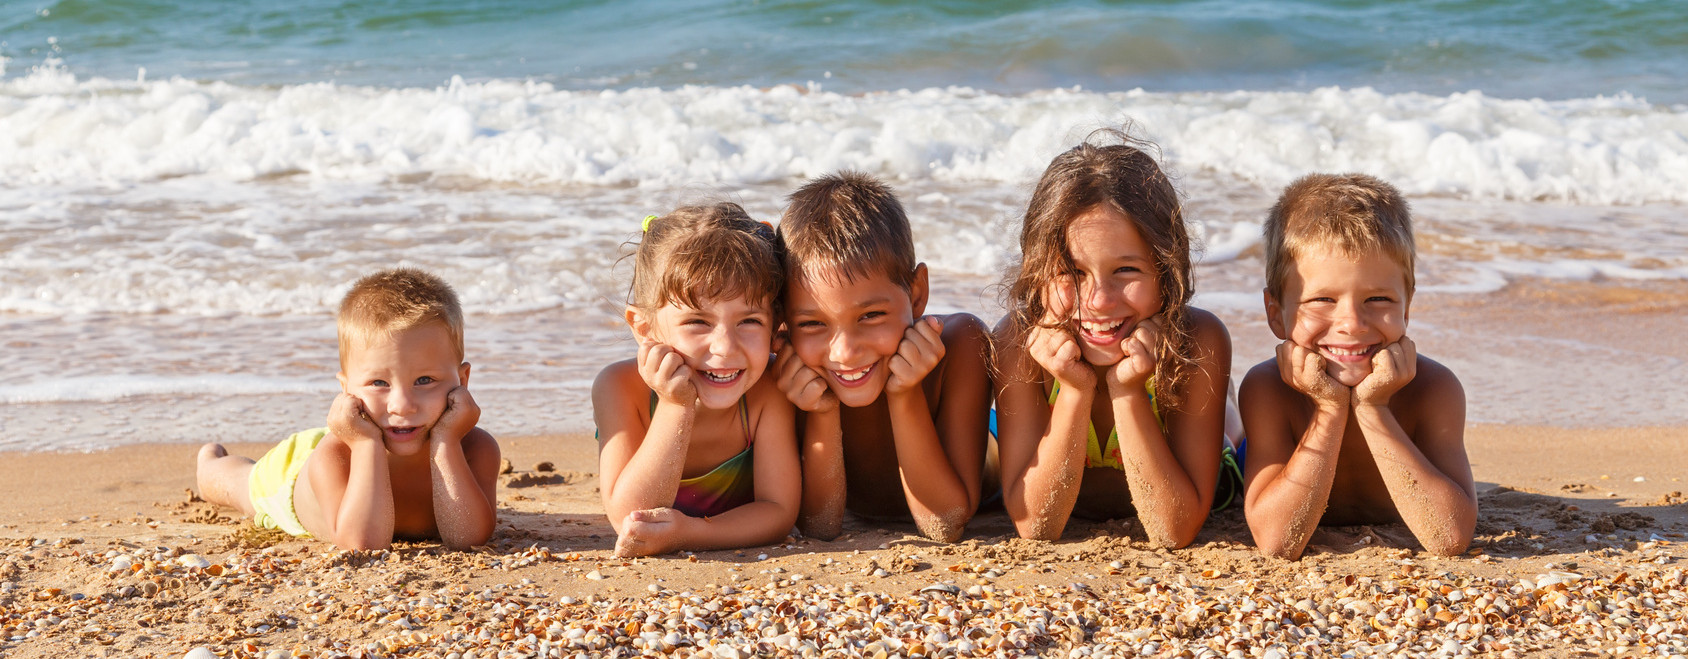 Five kids on the beach.